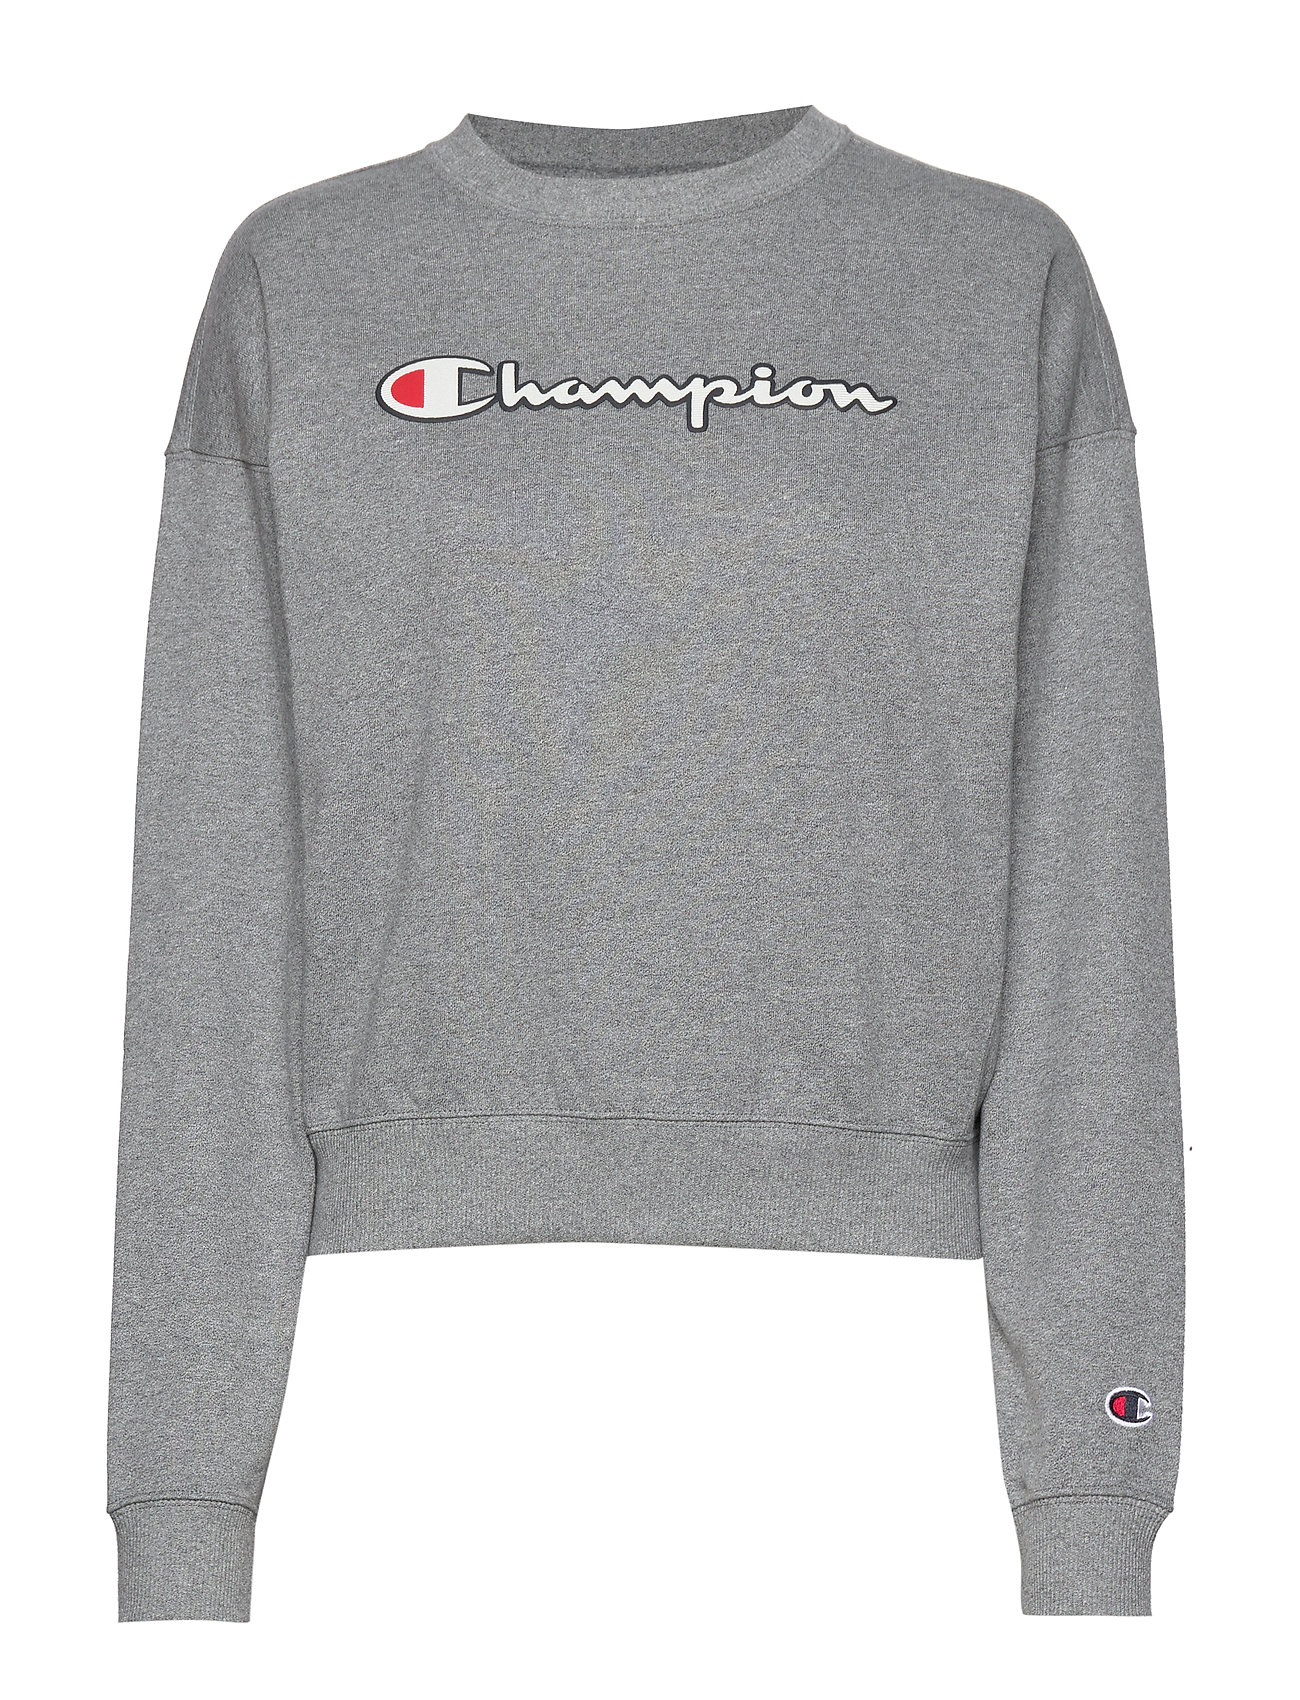 champion sweatshirt 100 cotton